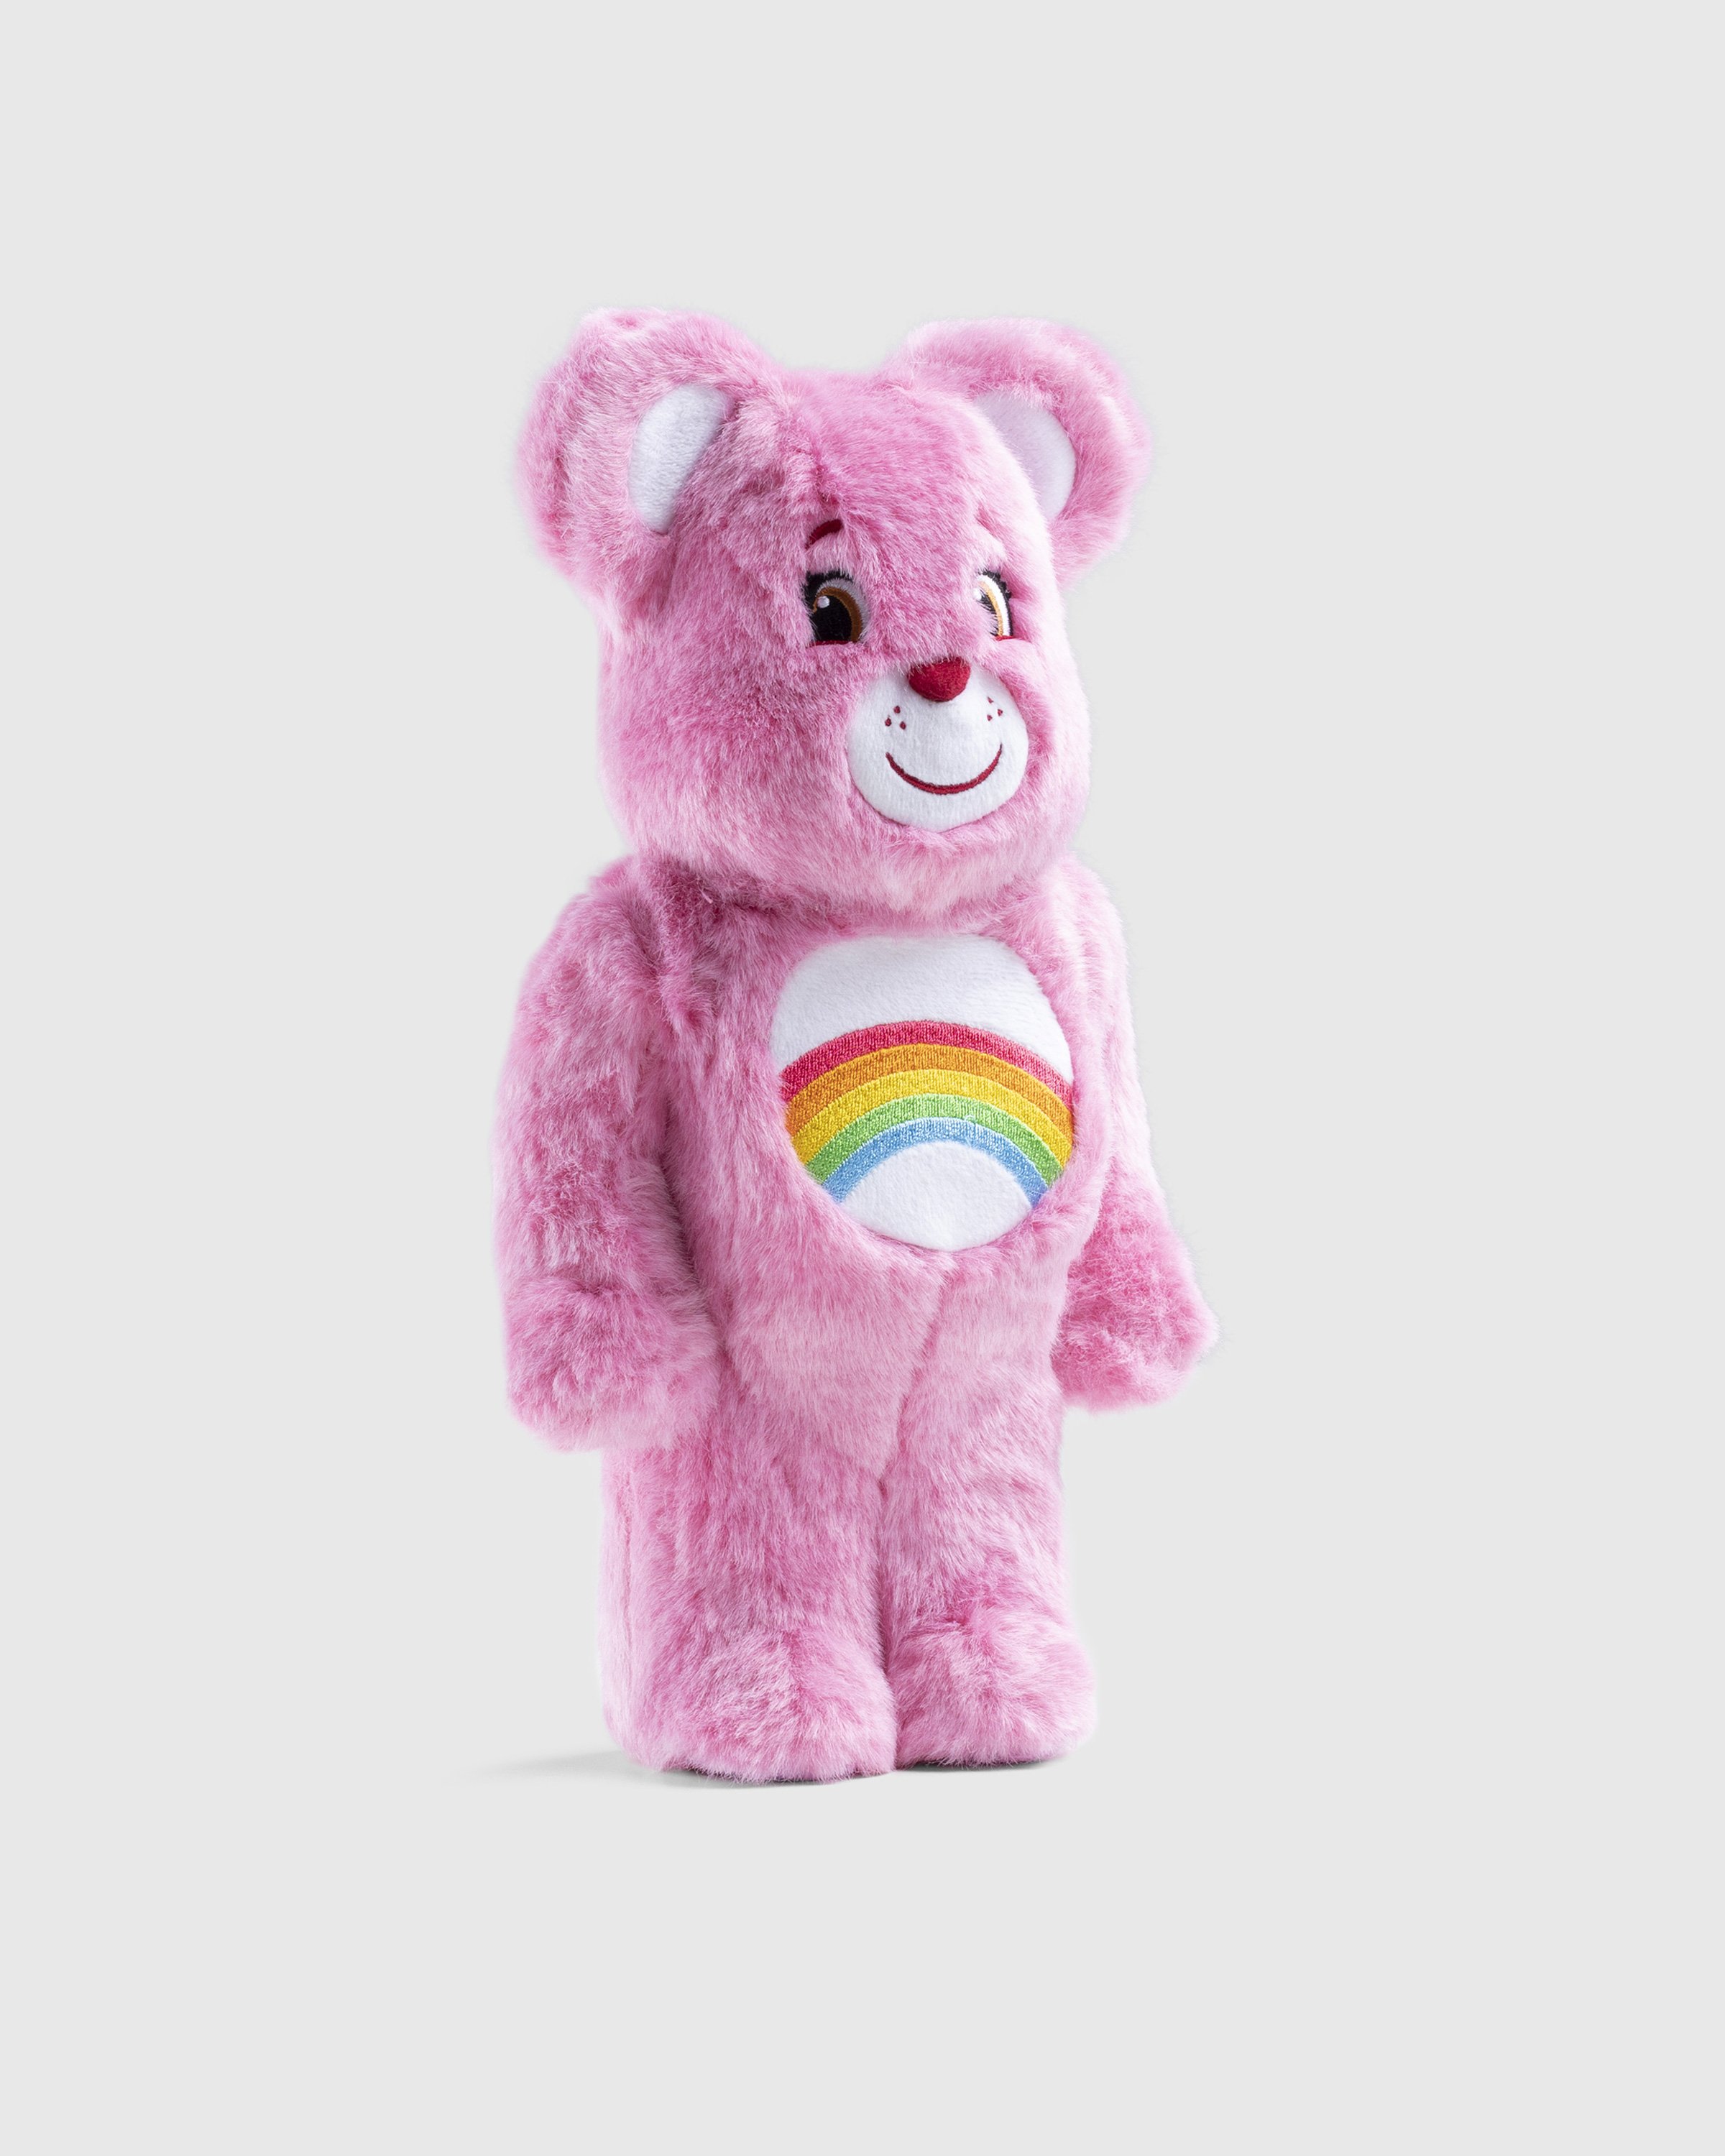 Medicom - Be@rbrick Cheer Bear Costume Version 1000% Pink - Lifestyle - Pink - Image 3